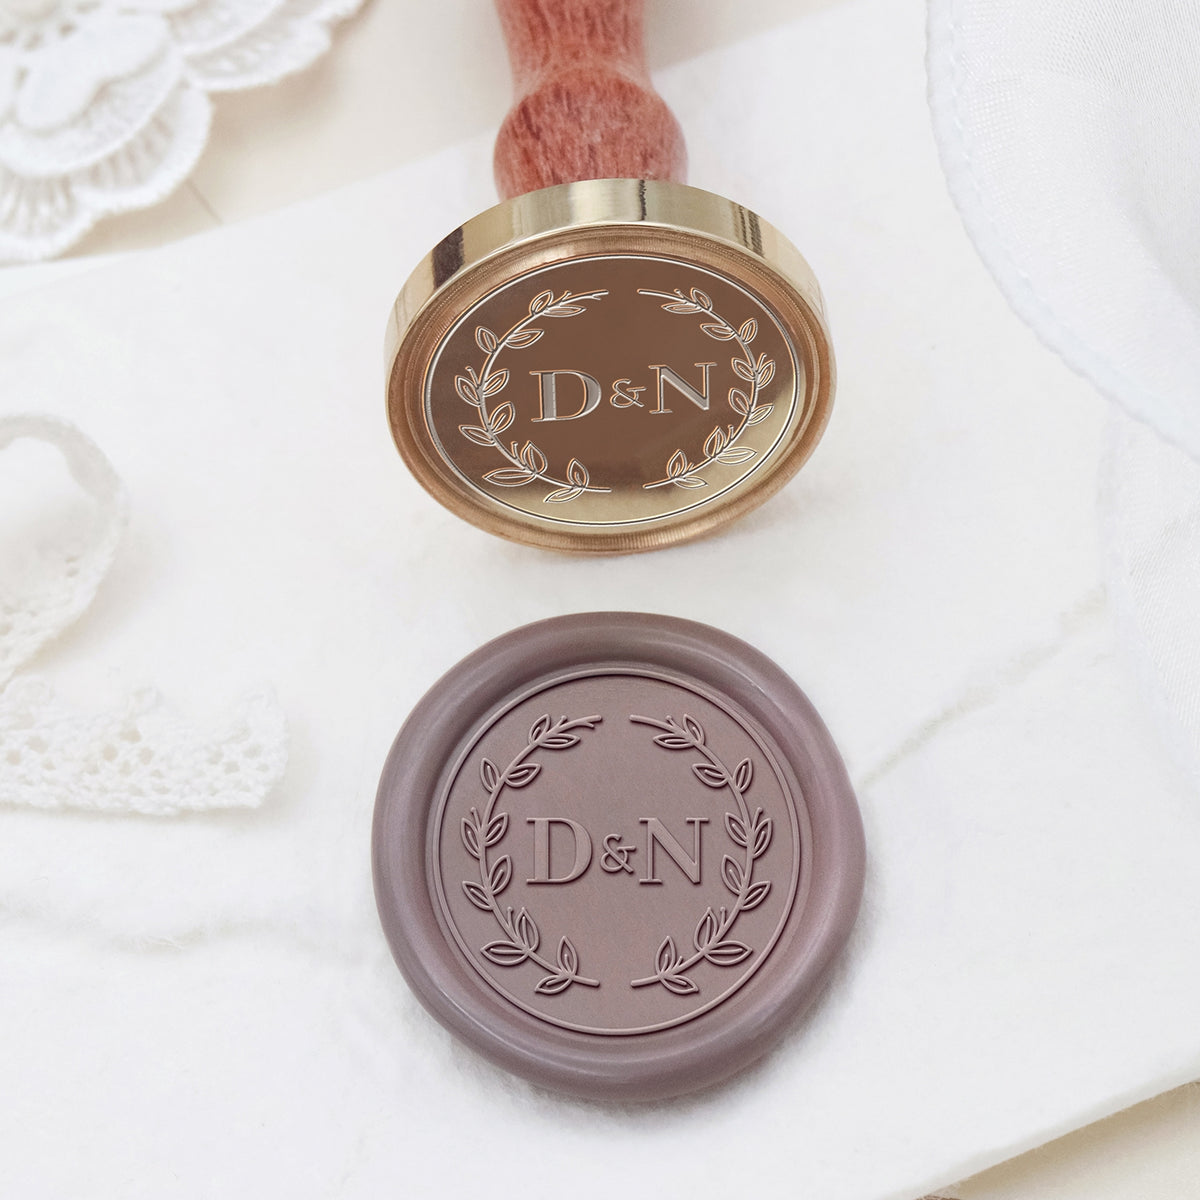 Hand wax stamp (seal) – Wedding motif – Two hearts